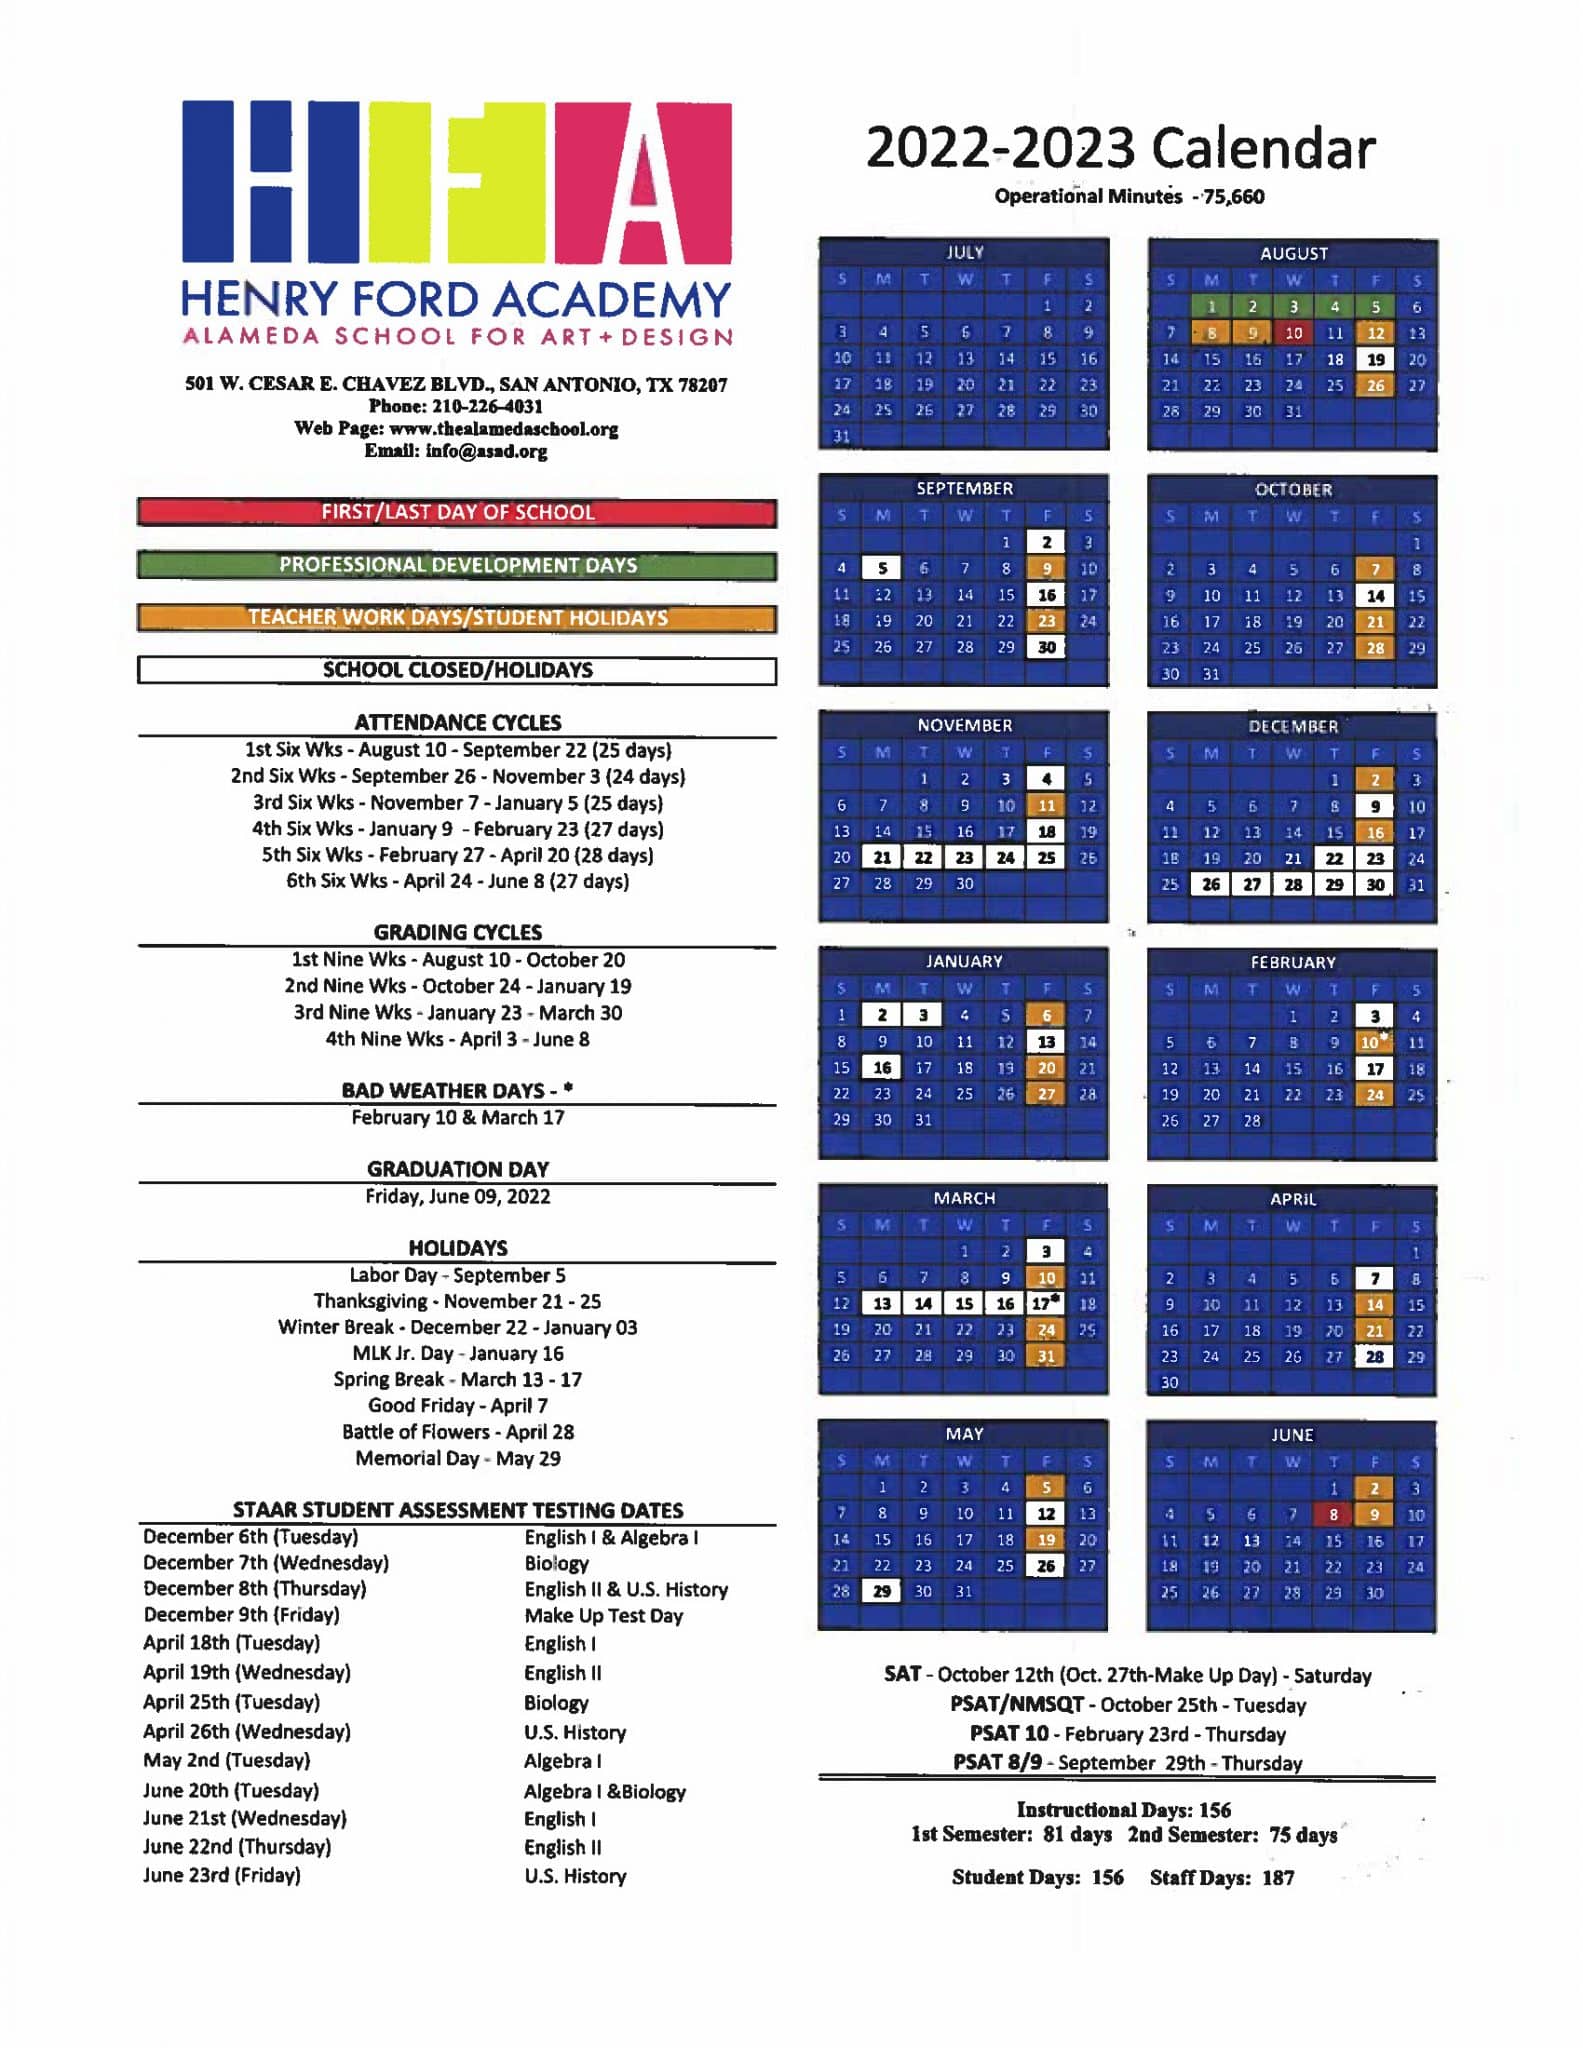 Calendar - HFA Alameda School